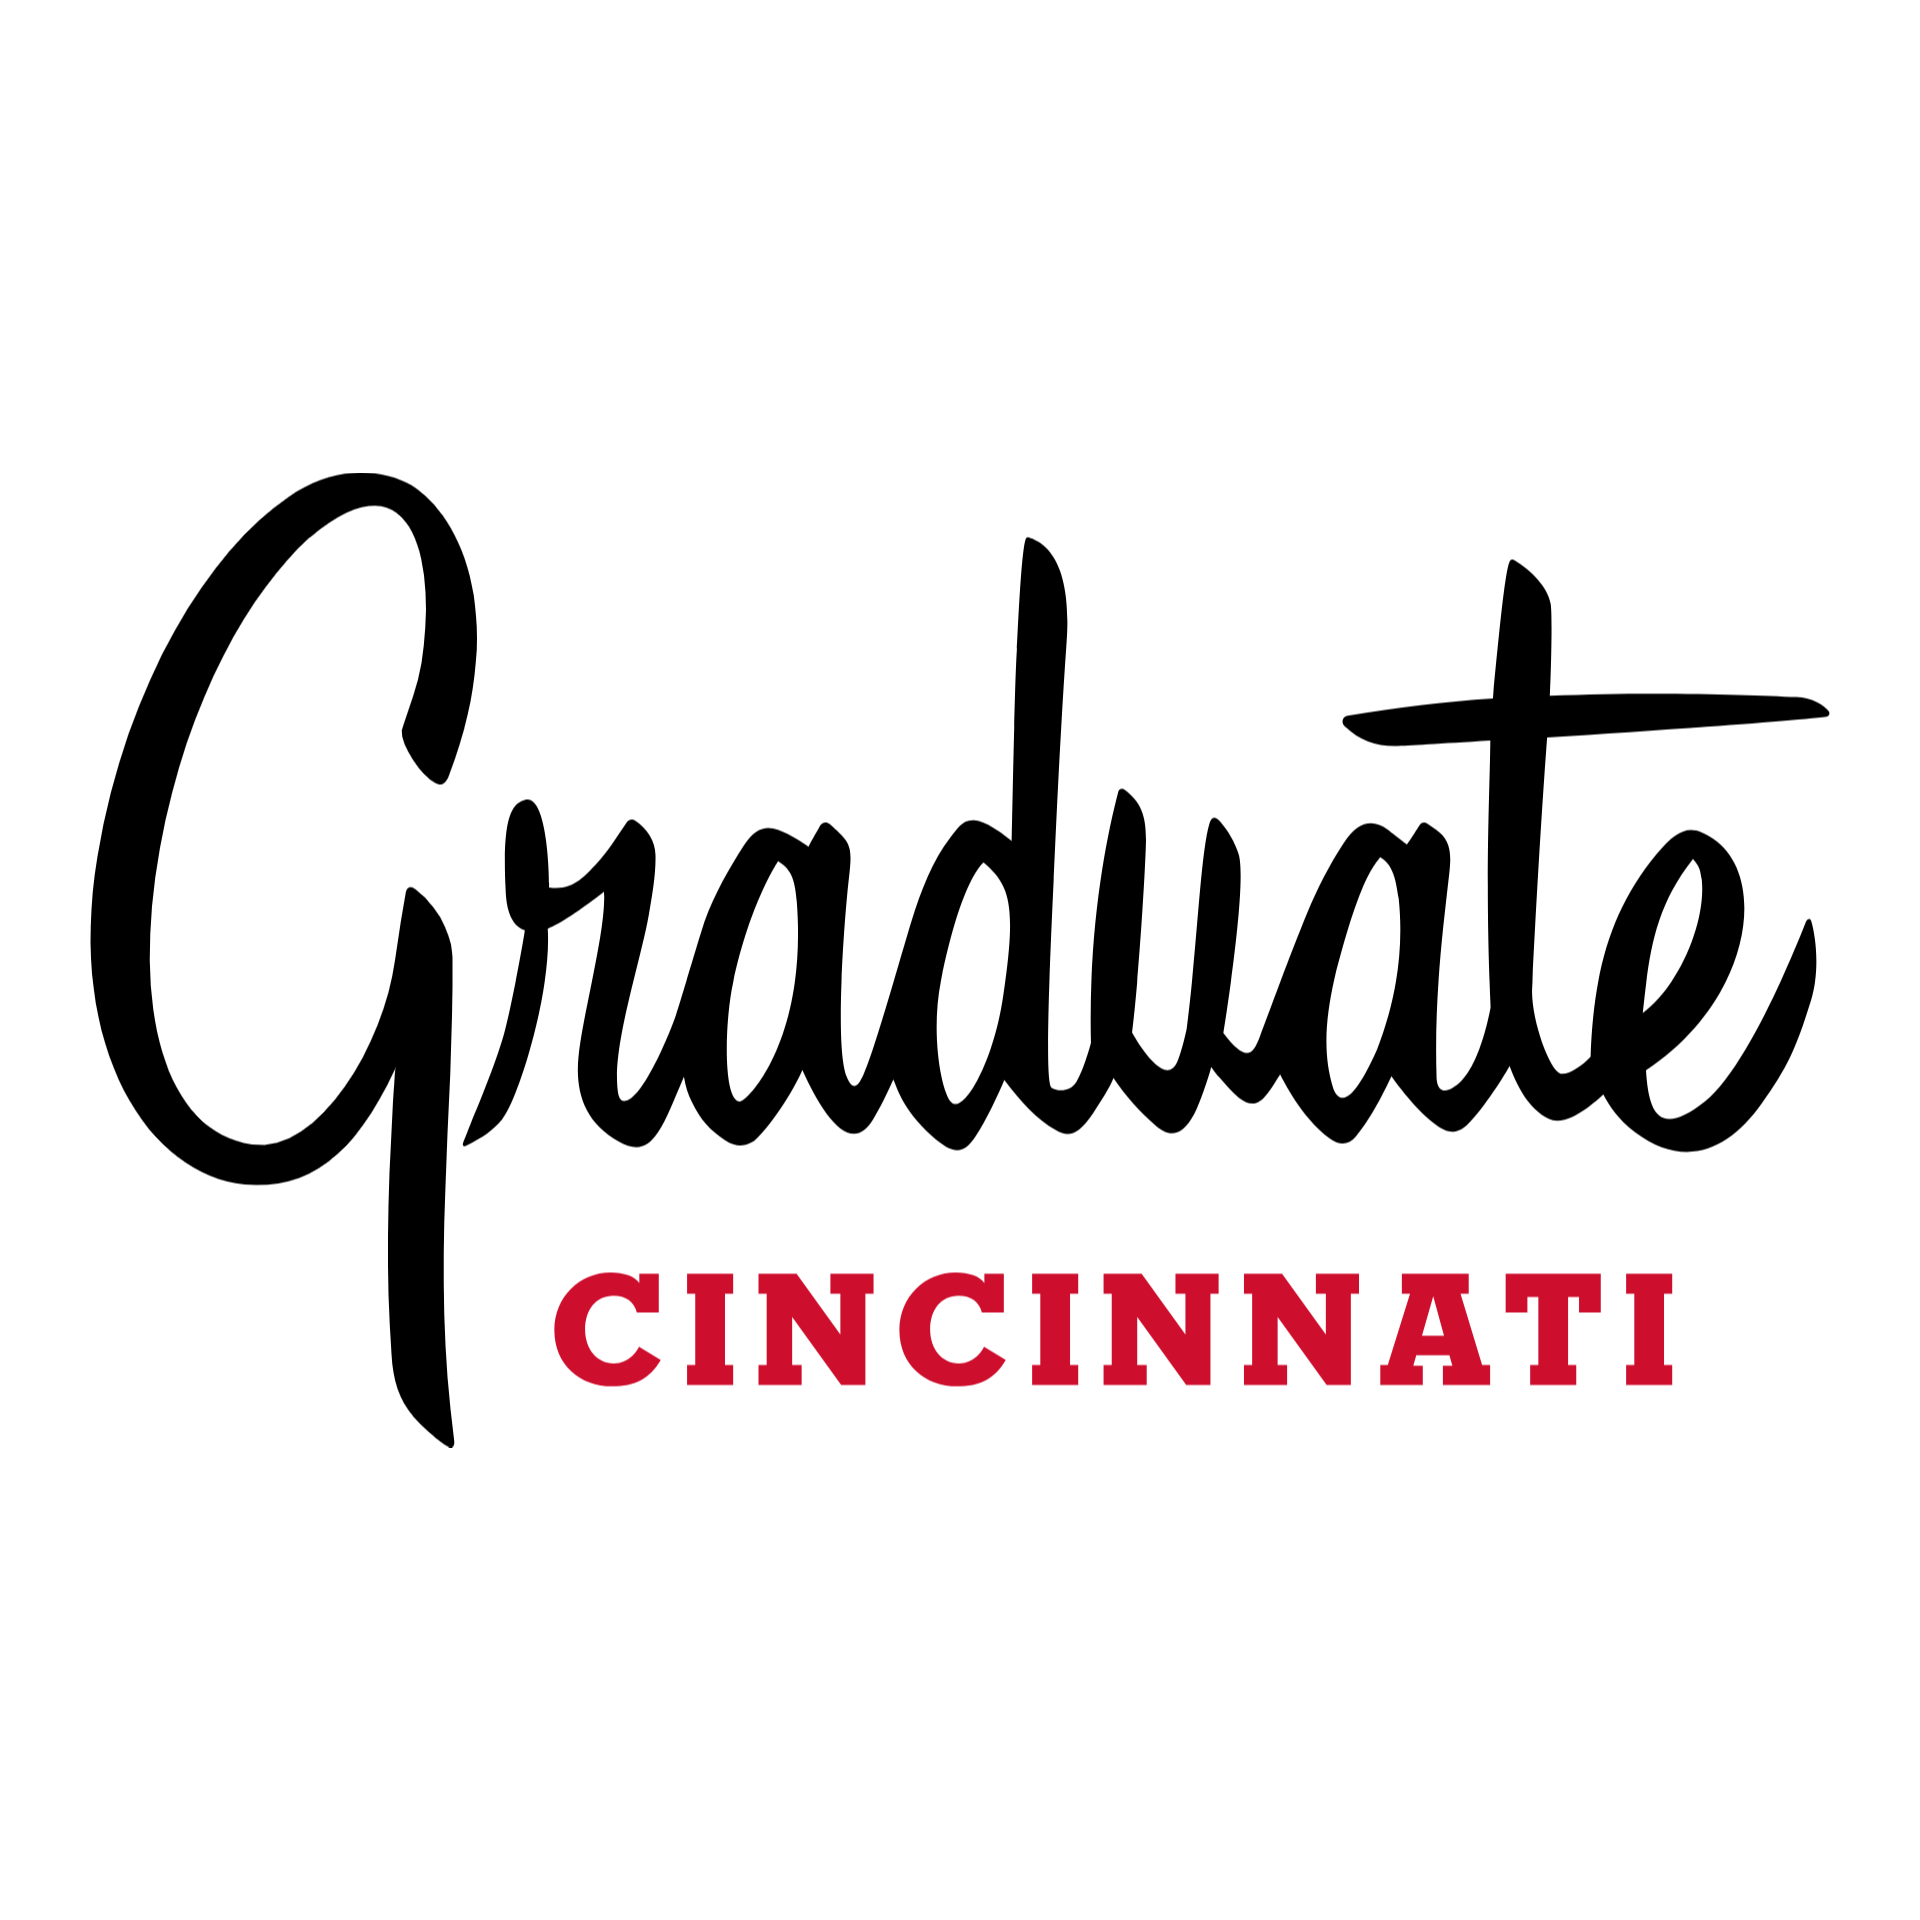 Graduate Cincinnati - Cincinnati, OH 45219 - (513)487-3800 | ShowMeLocal.com